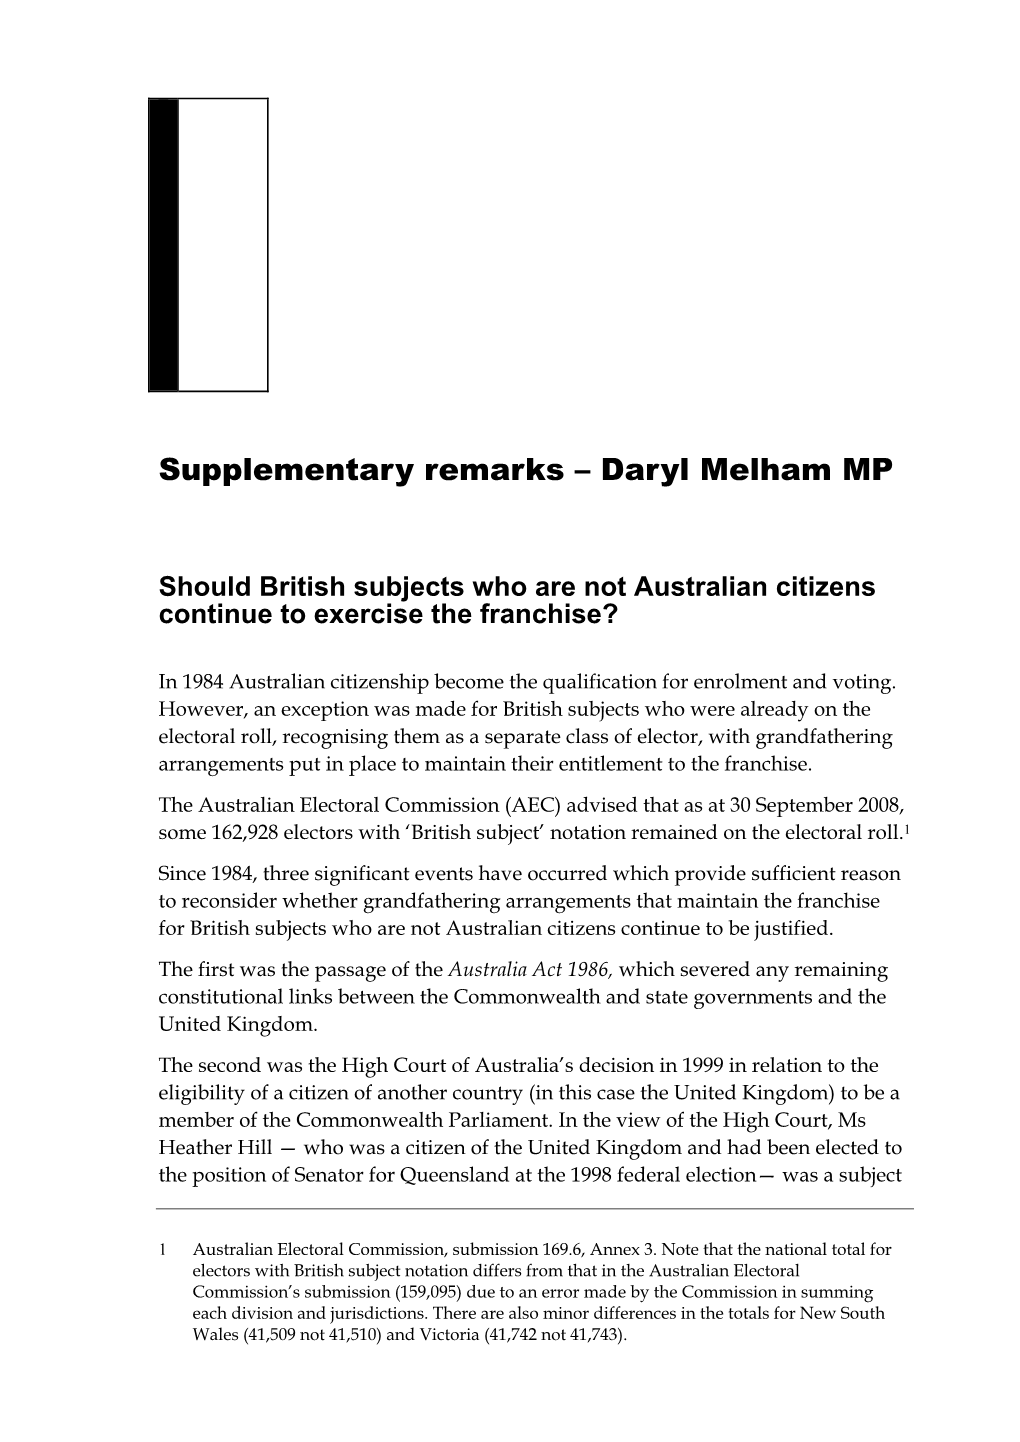 Supplementary Remarks – Daryl Melham MP